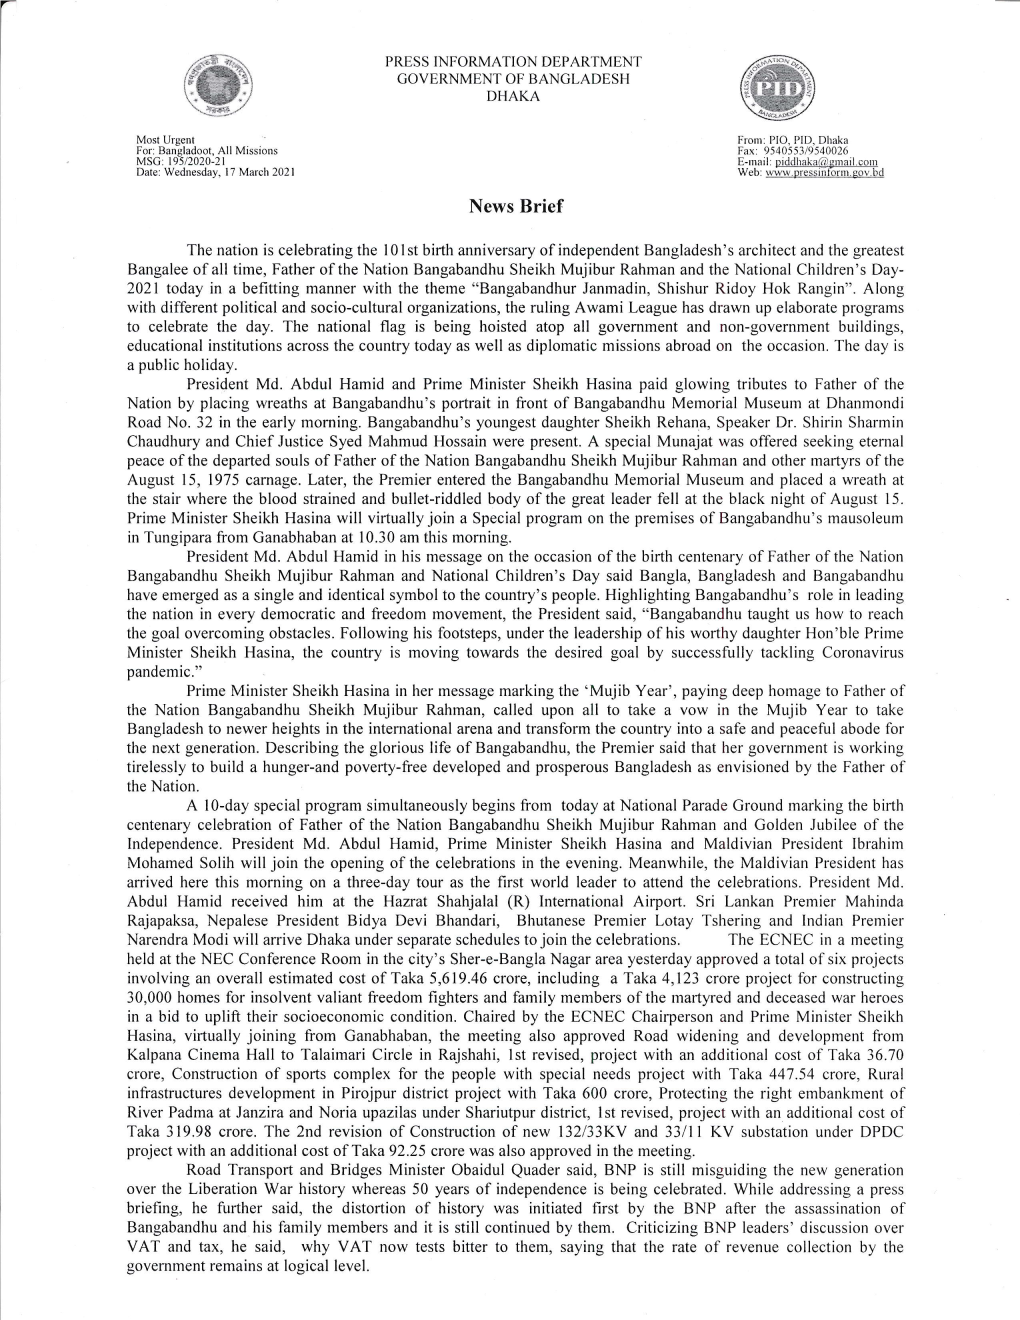 News Brief Rajapaksa, Nepalese President Bidya Devi Bhandari